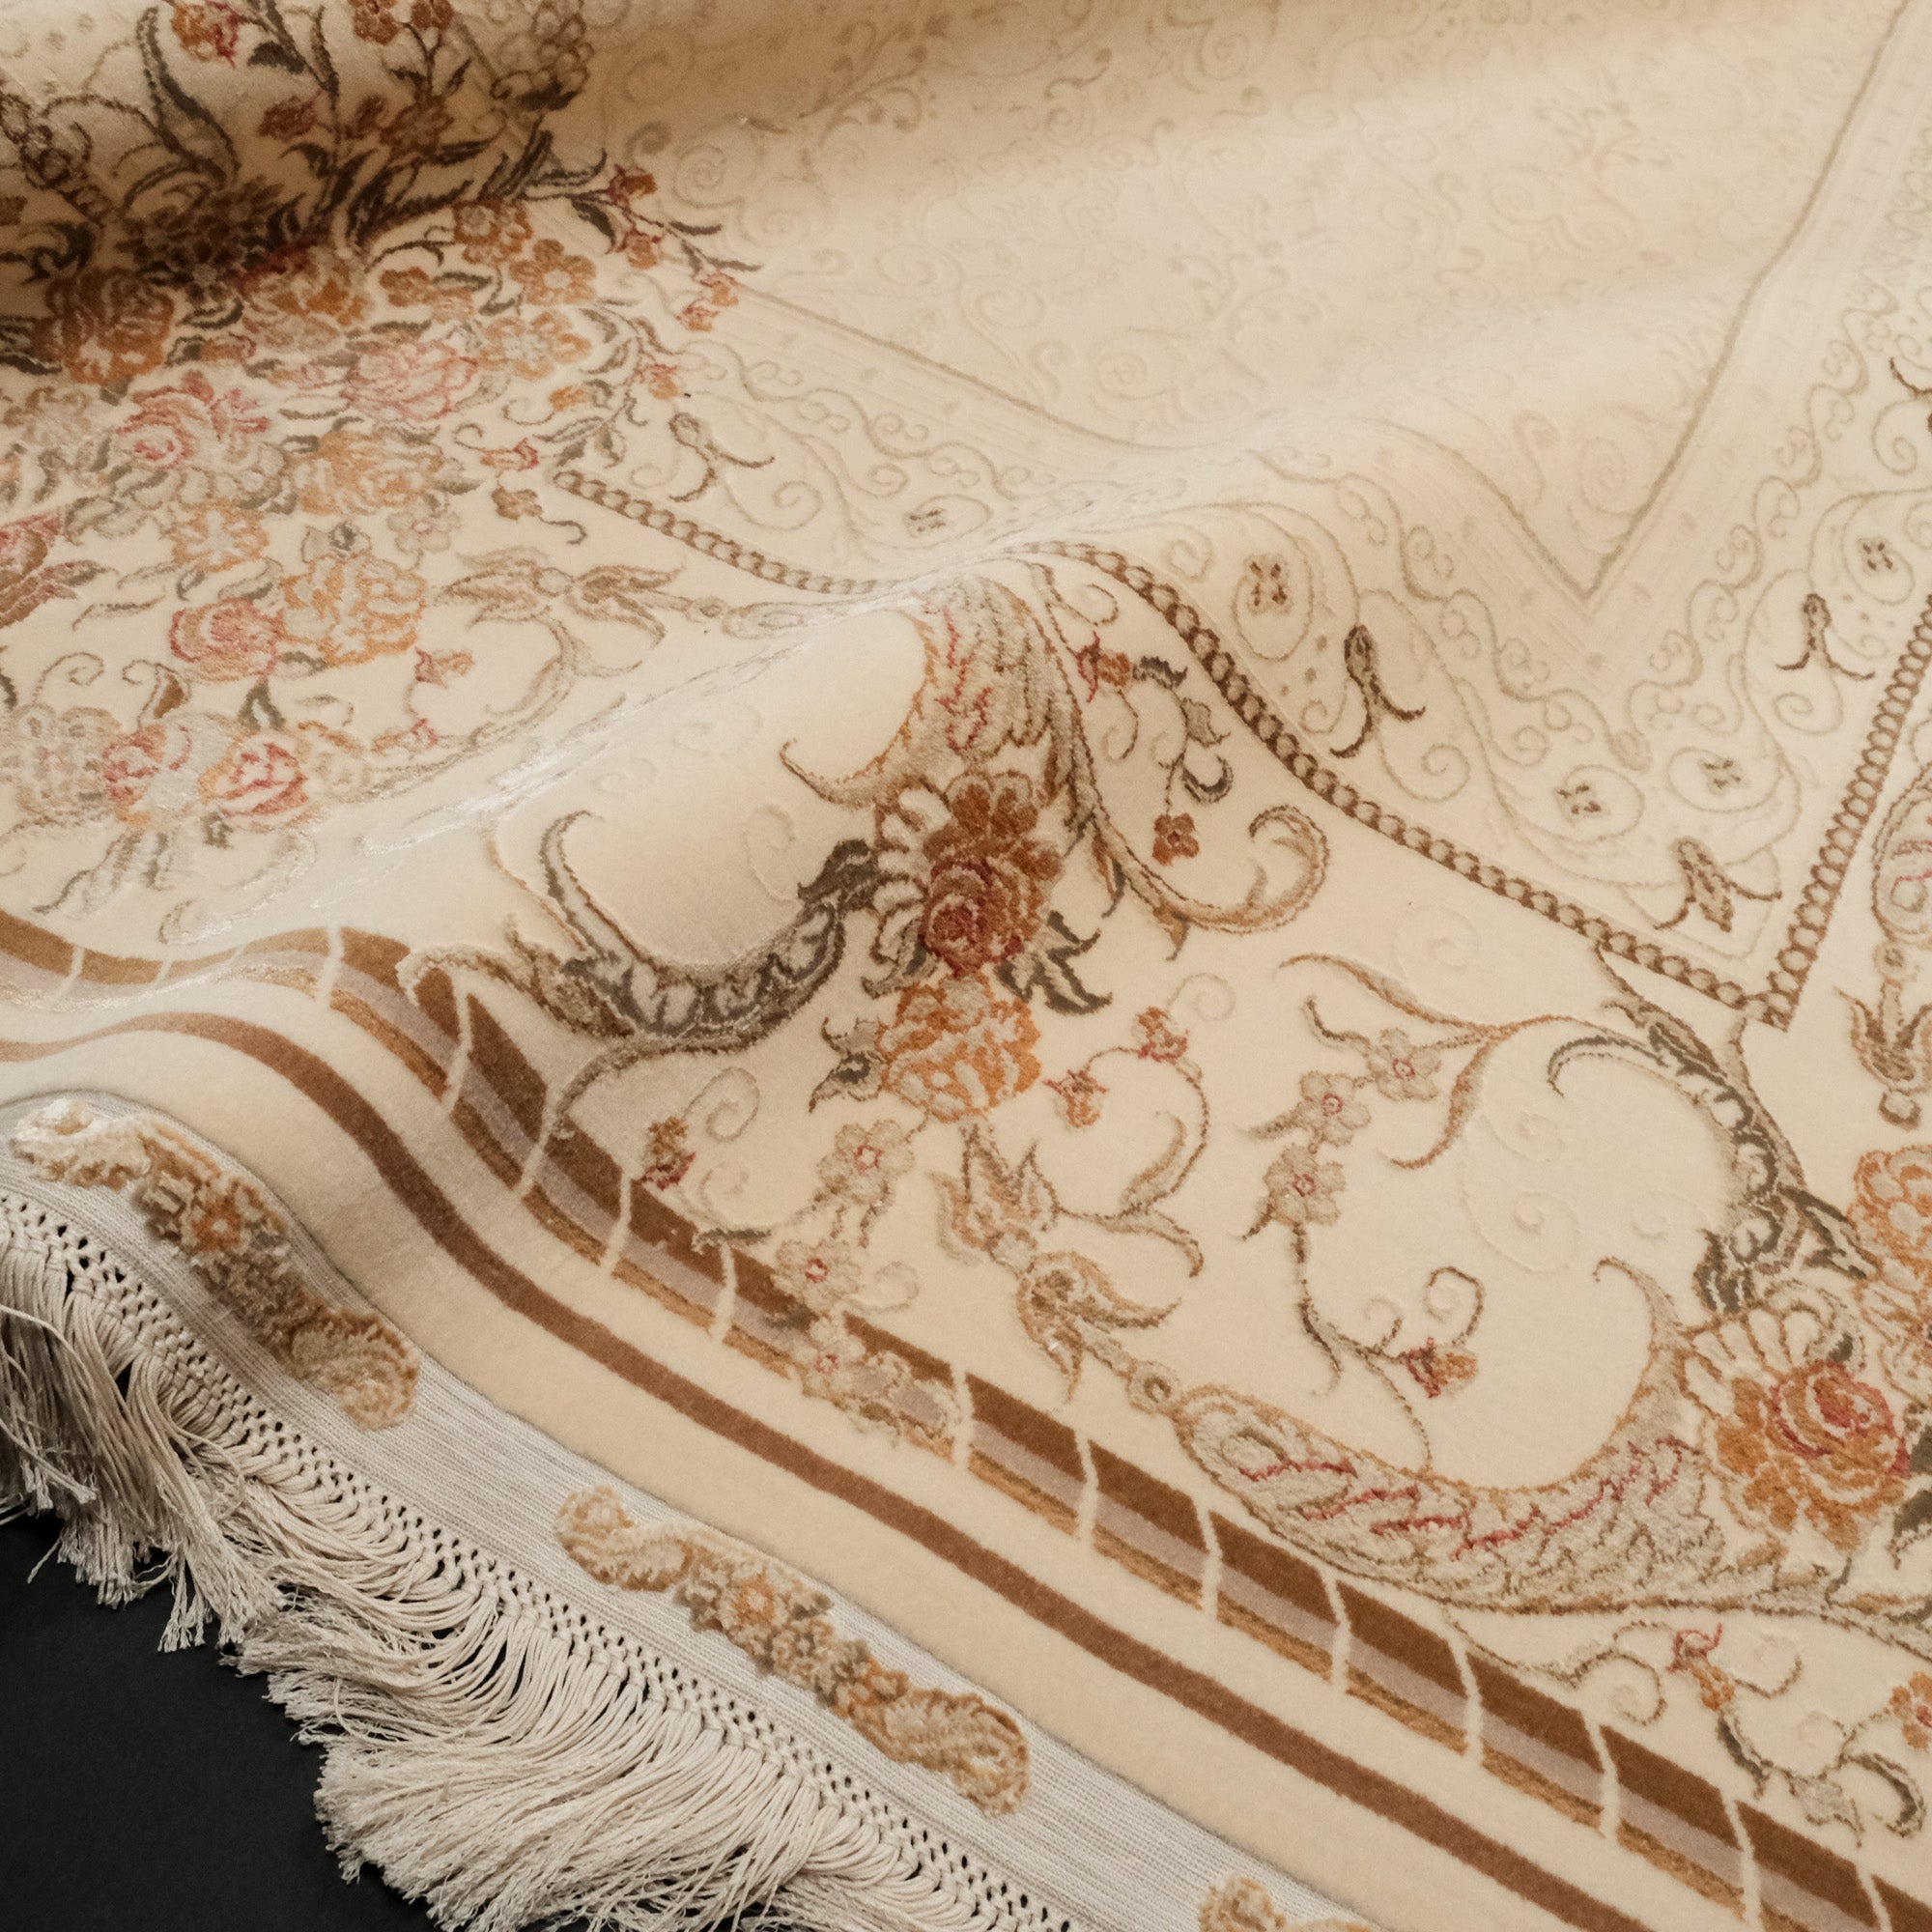 Zâde Series Floral Patterned Hand-Woven Cream Silk Carpet